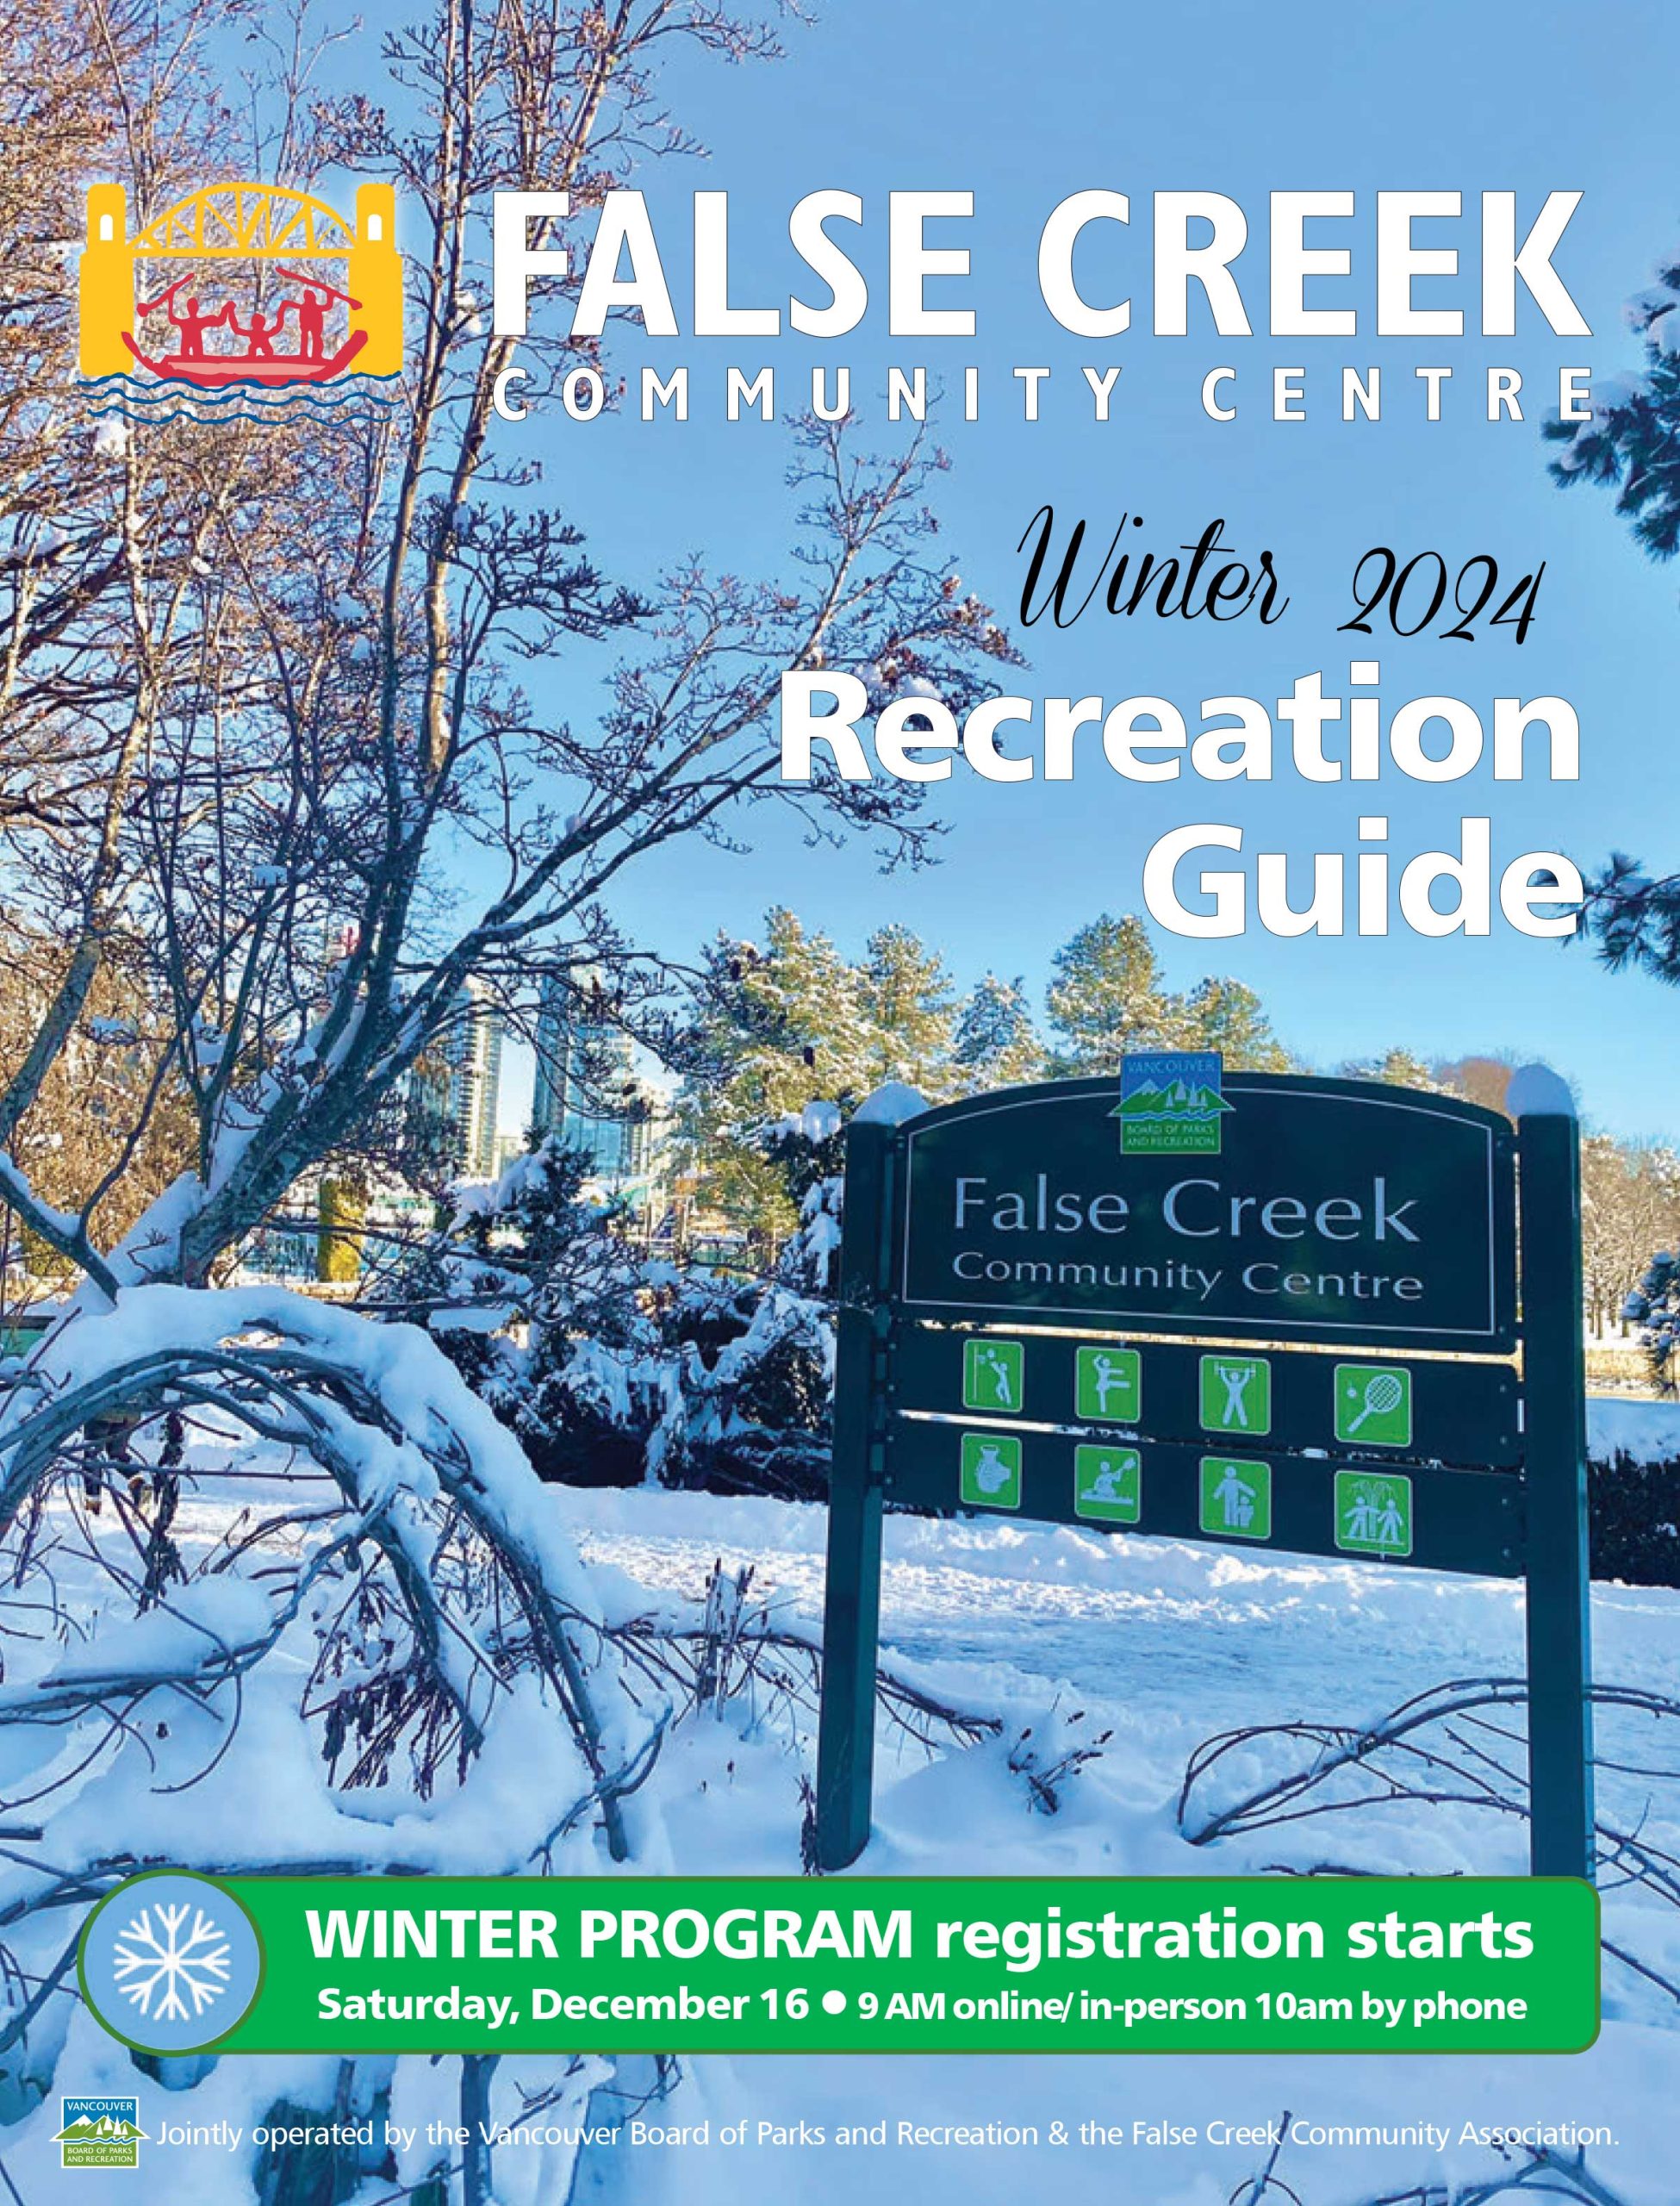 False Creek Community Centre Fall 2023 Recreation Guide